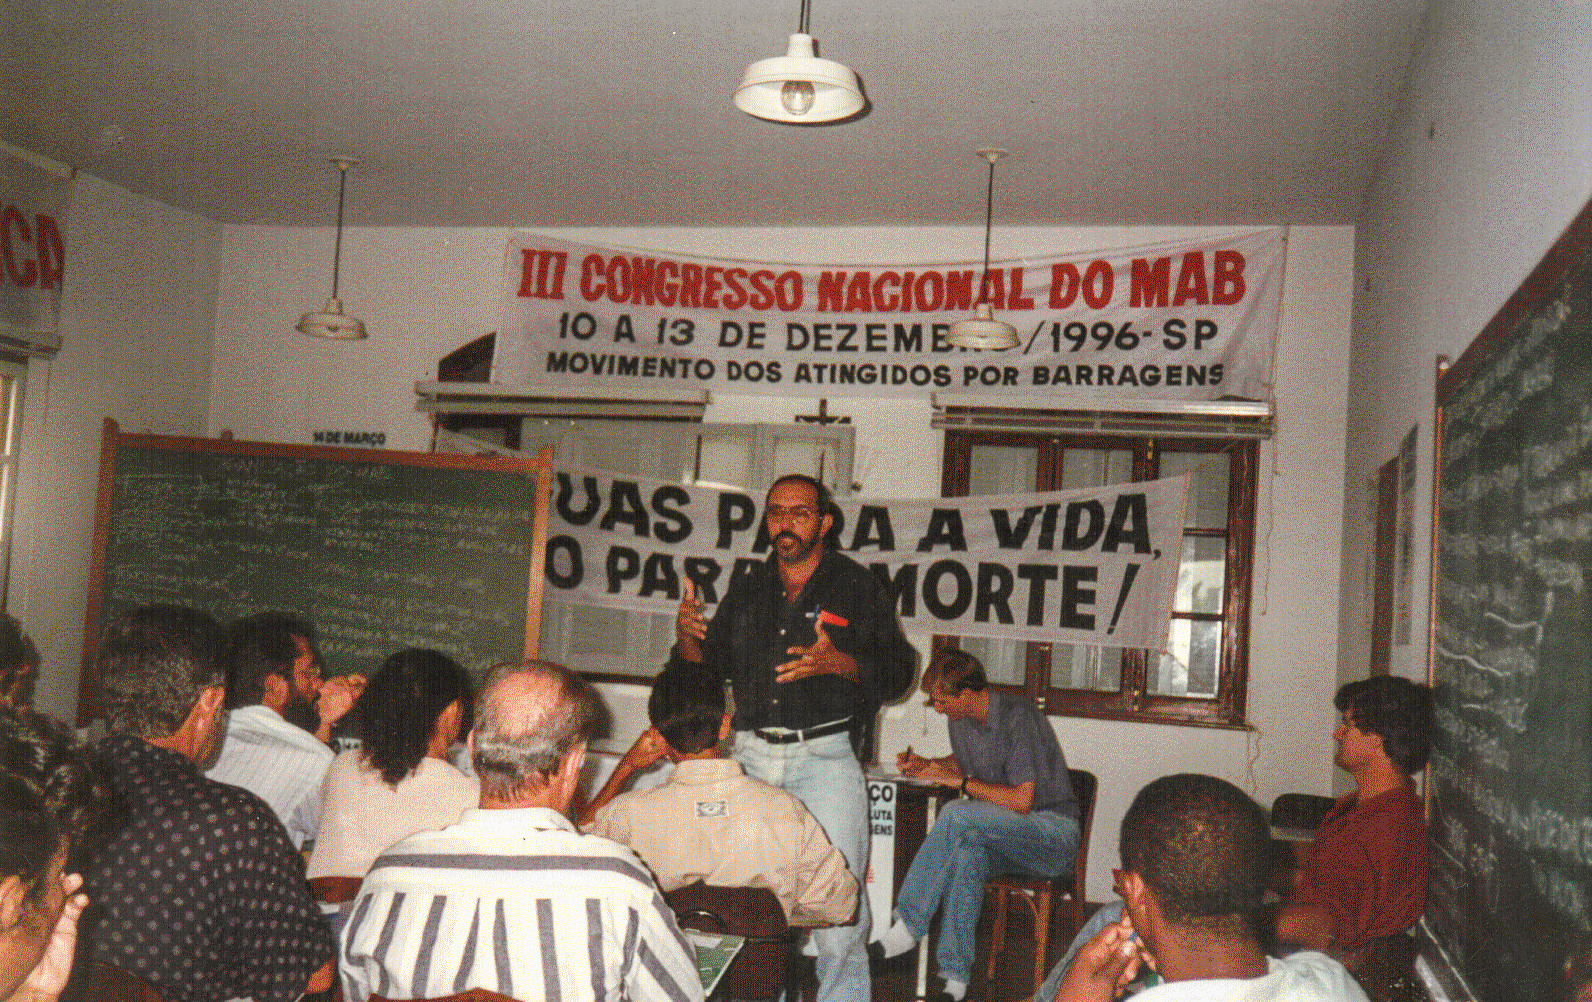 III Congresso Nacional do MAB